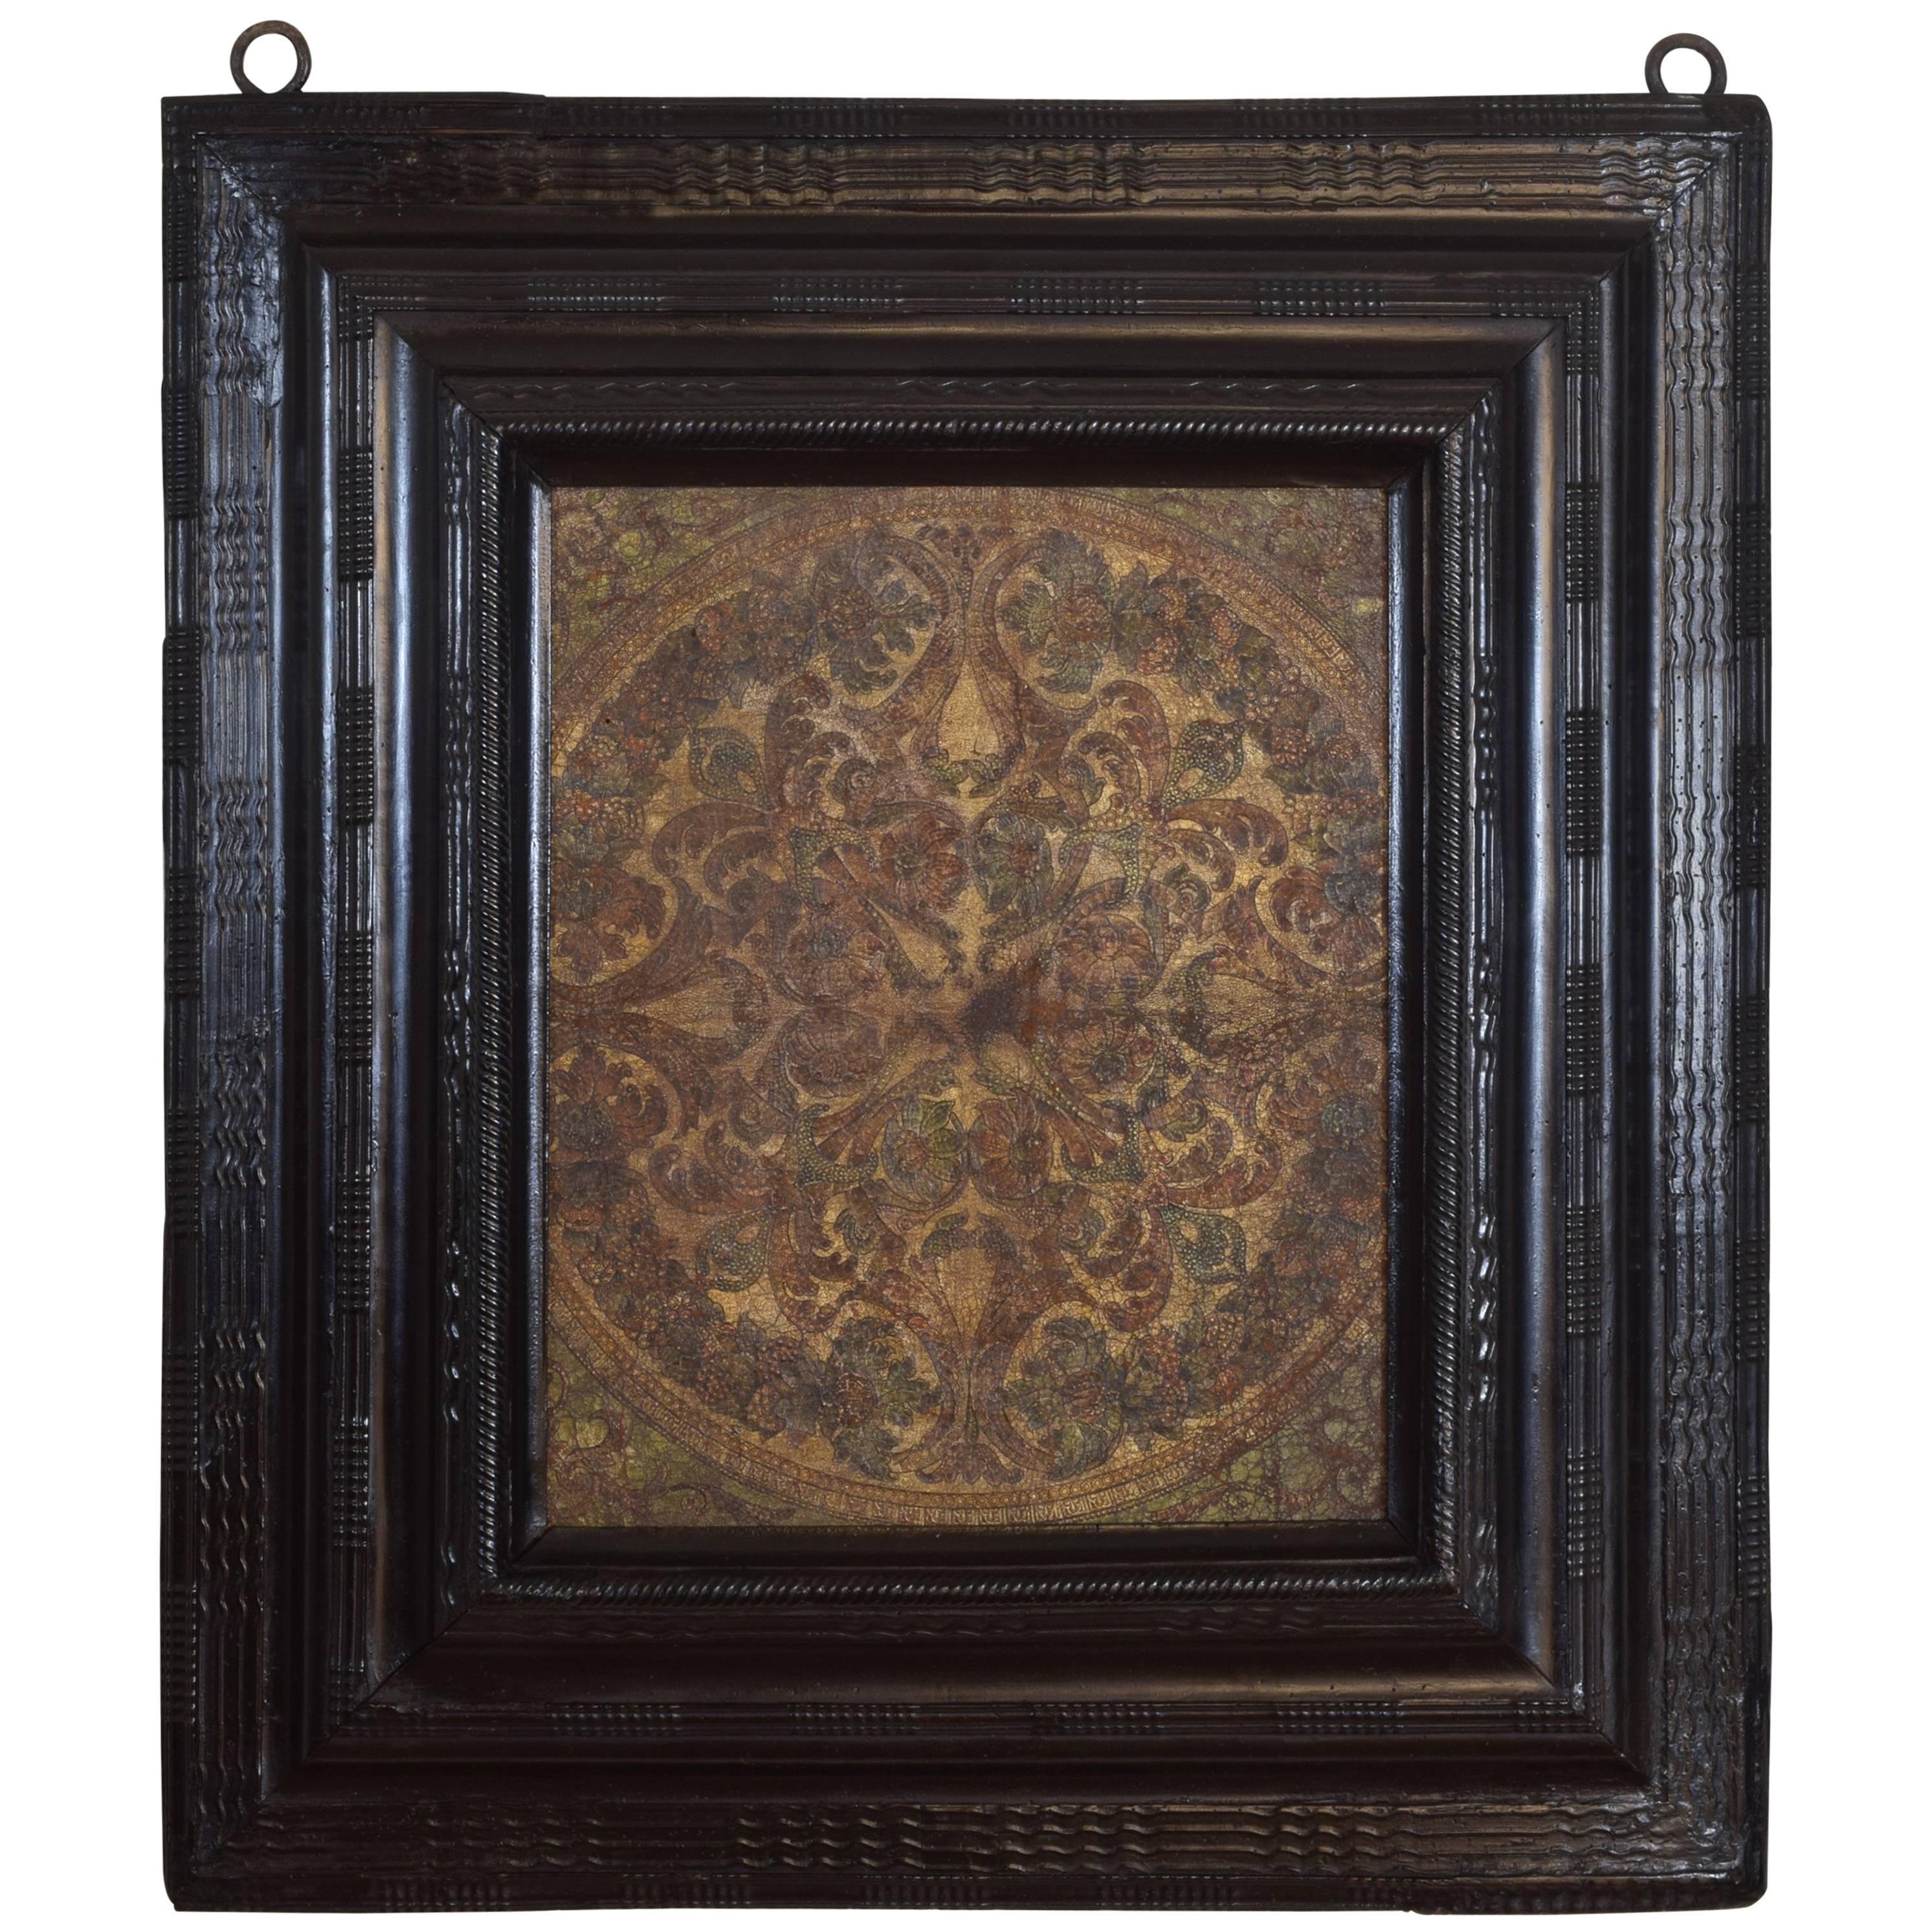 Tooled Leather Panel in Italian, Lombardia, Baroque Guilloche Ebonized Frame